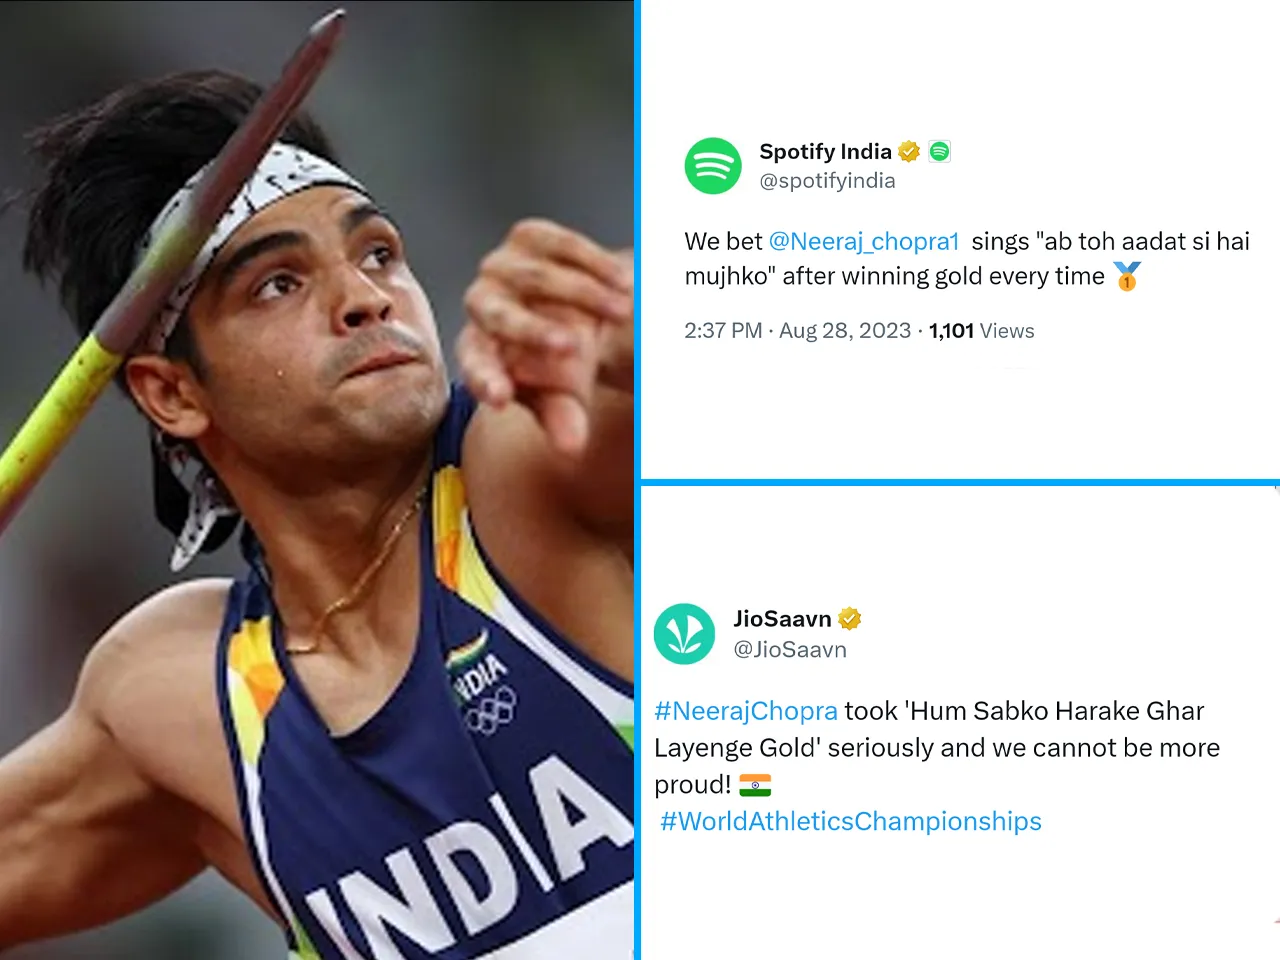 Brands congratulate Neeraj Chopra on his win at the World Athletics Championship